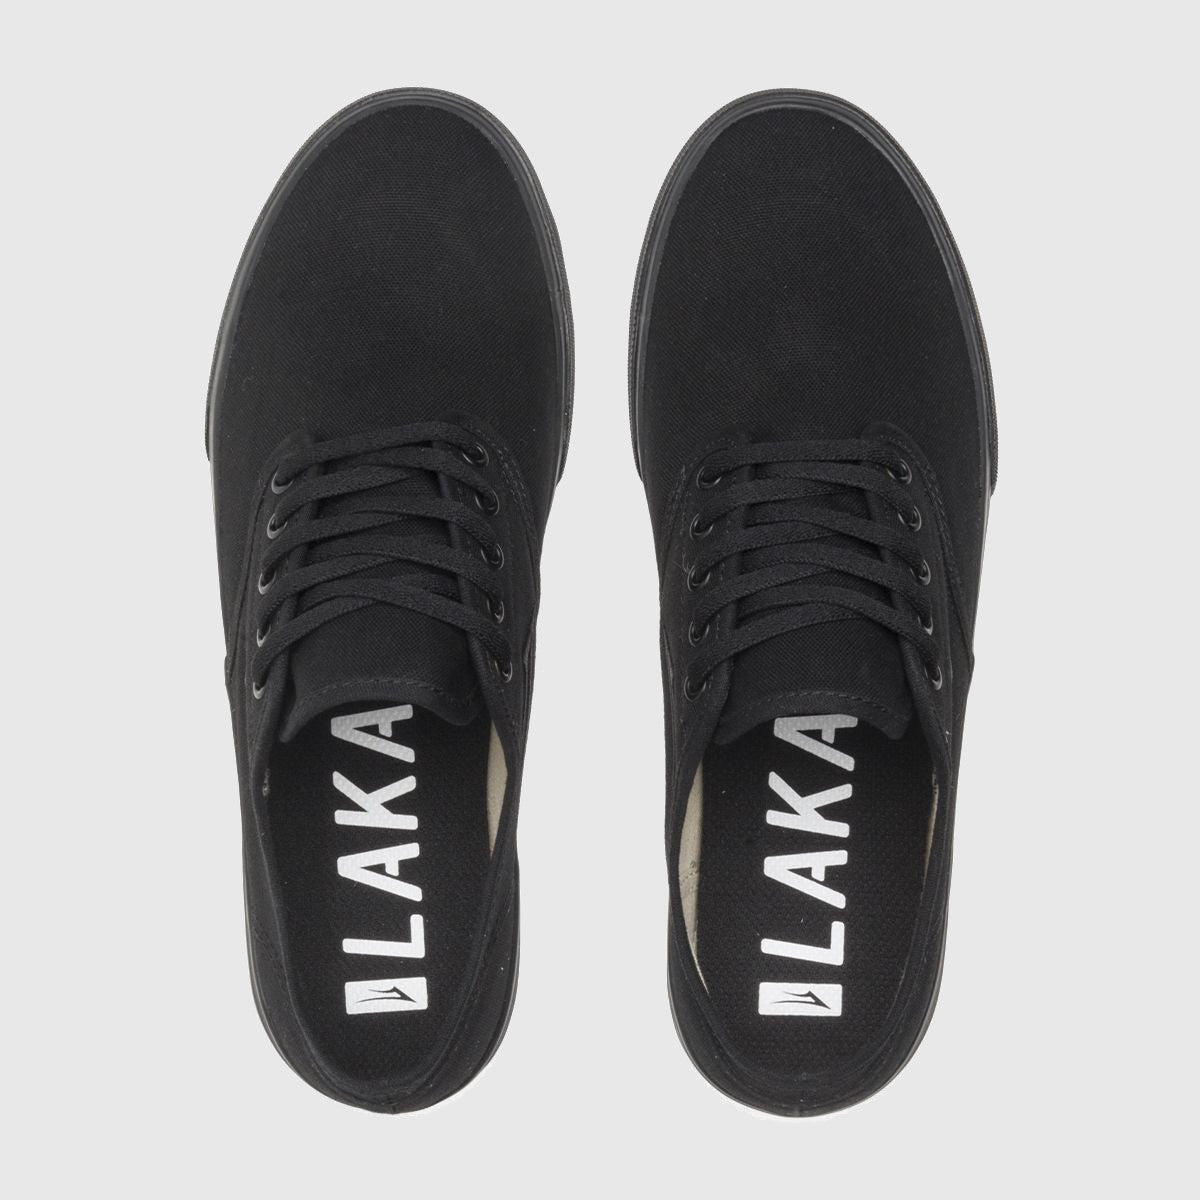 Lakai Oxford Skate Shoes Black/Black Canvas